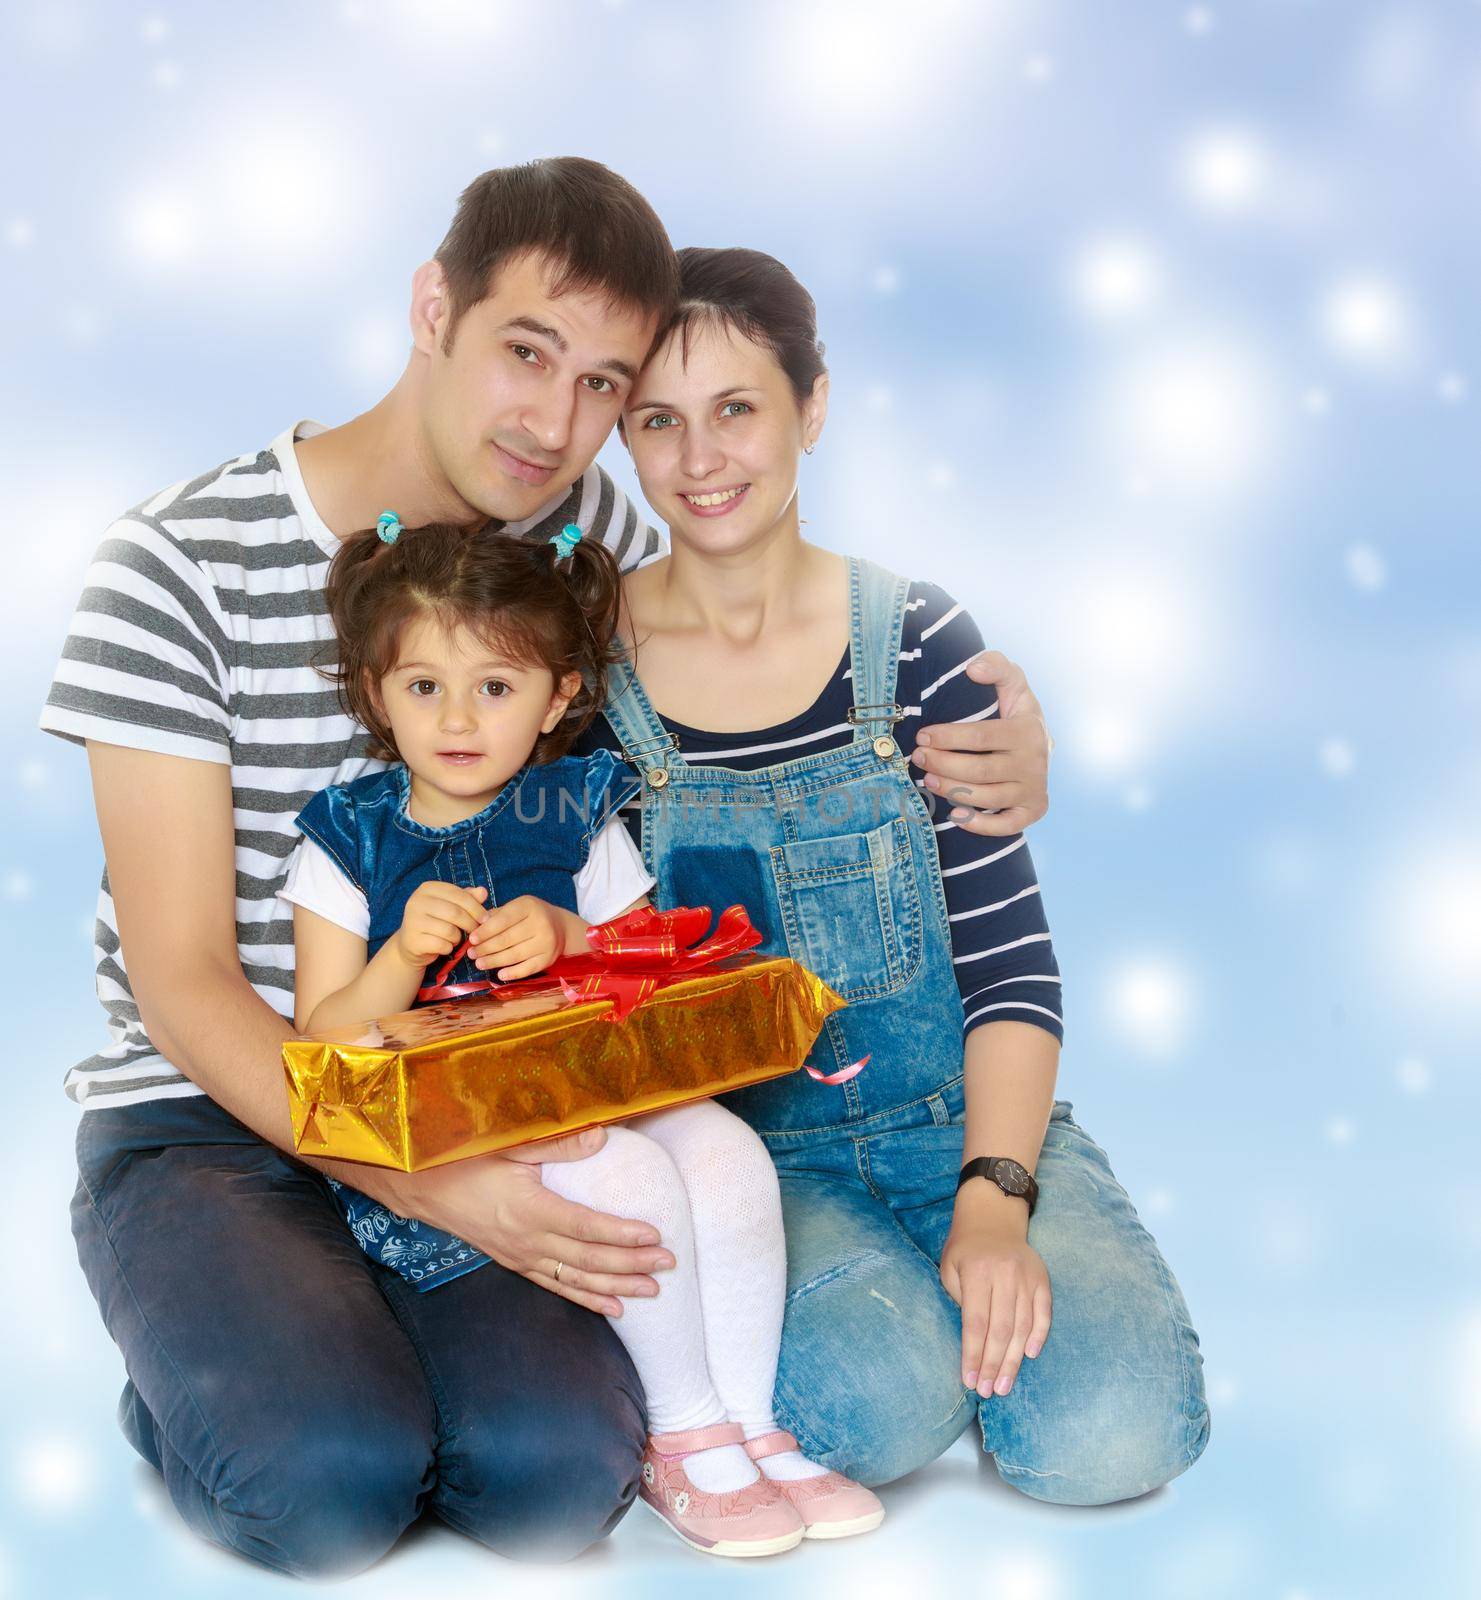 Young family in Christmas holiday. by kolesnikov_studio